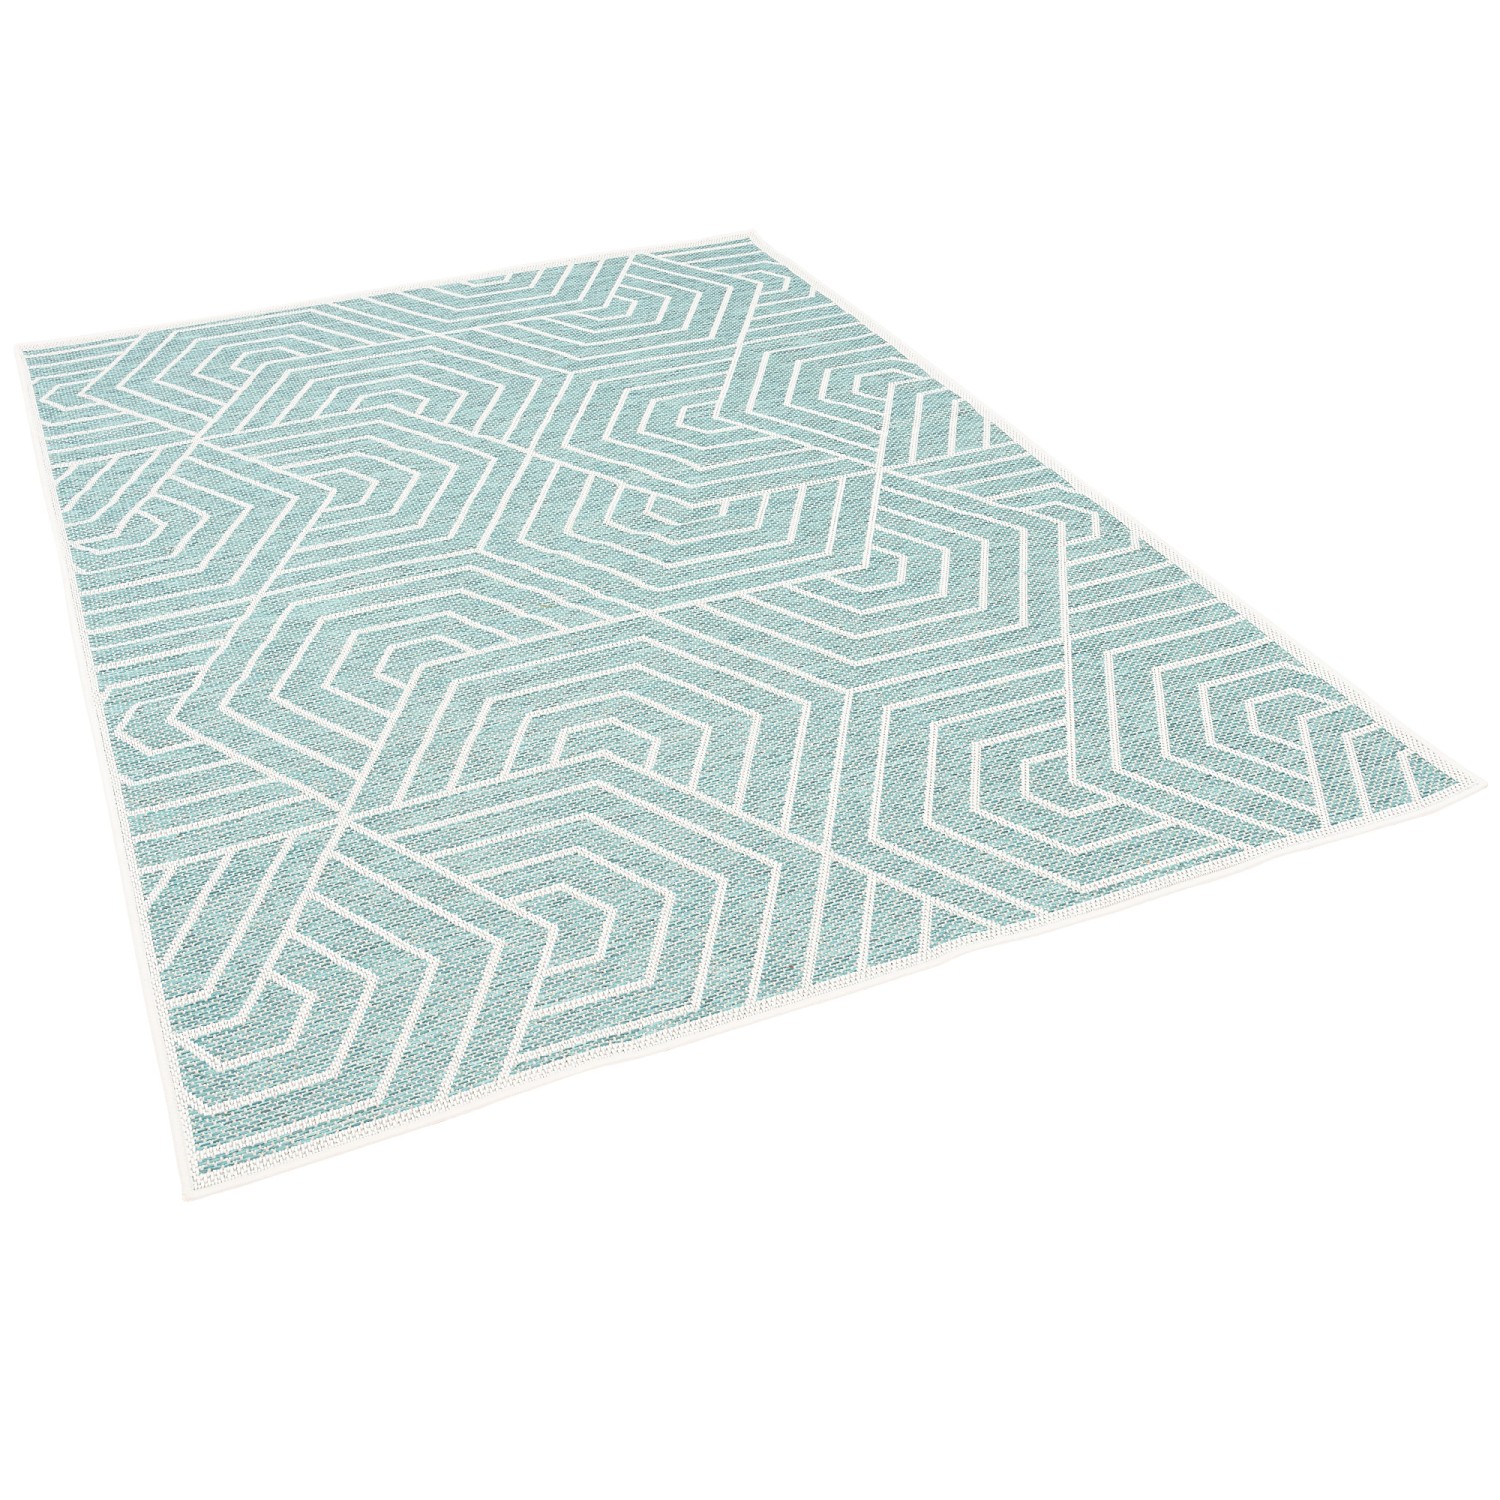 Pergamon In & Outdoor Teppich Flachgewebe Ottawa Trend Mintgrün 160x230cm